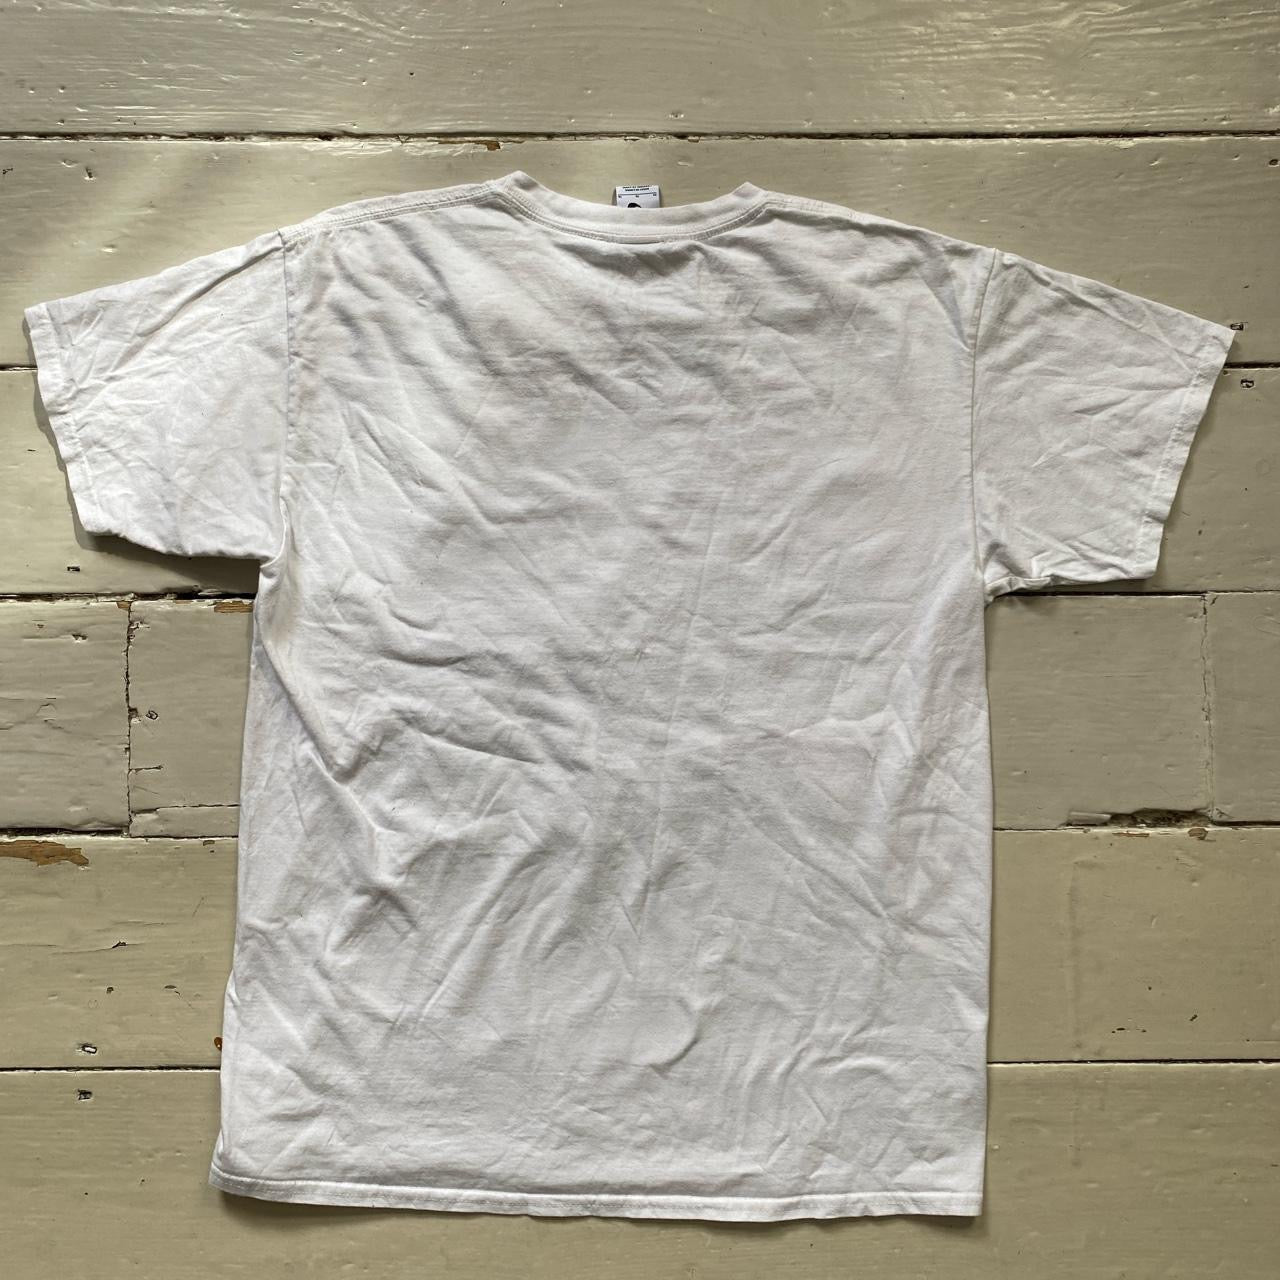 Stussy Nike T Shirt White (XL)